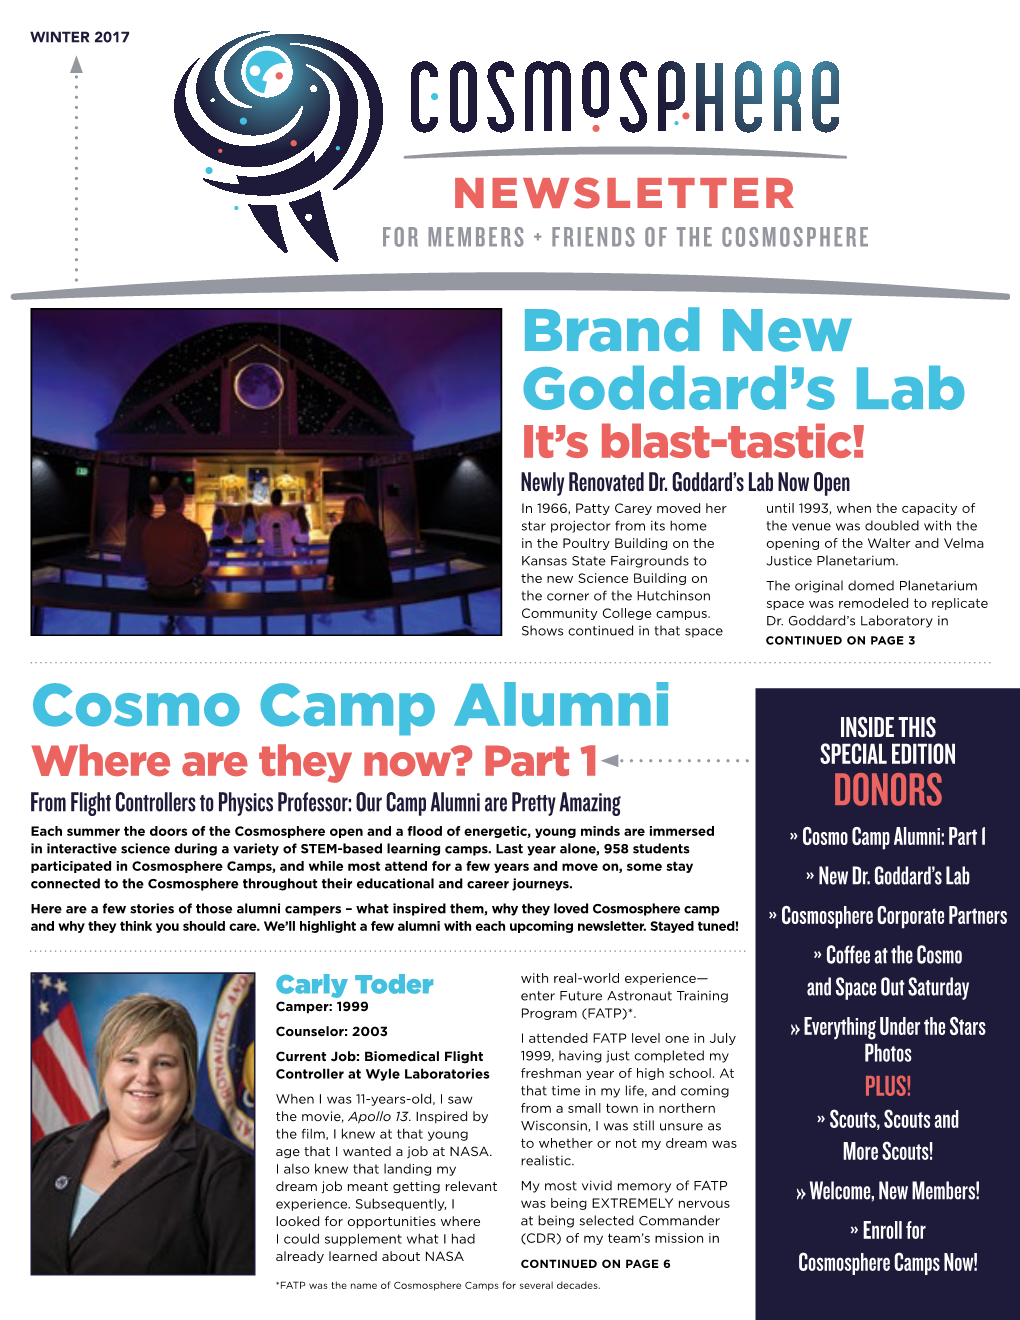 Brand New Goddard's Lab Cosmo Camp Alumni